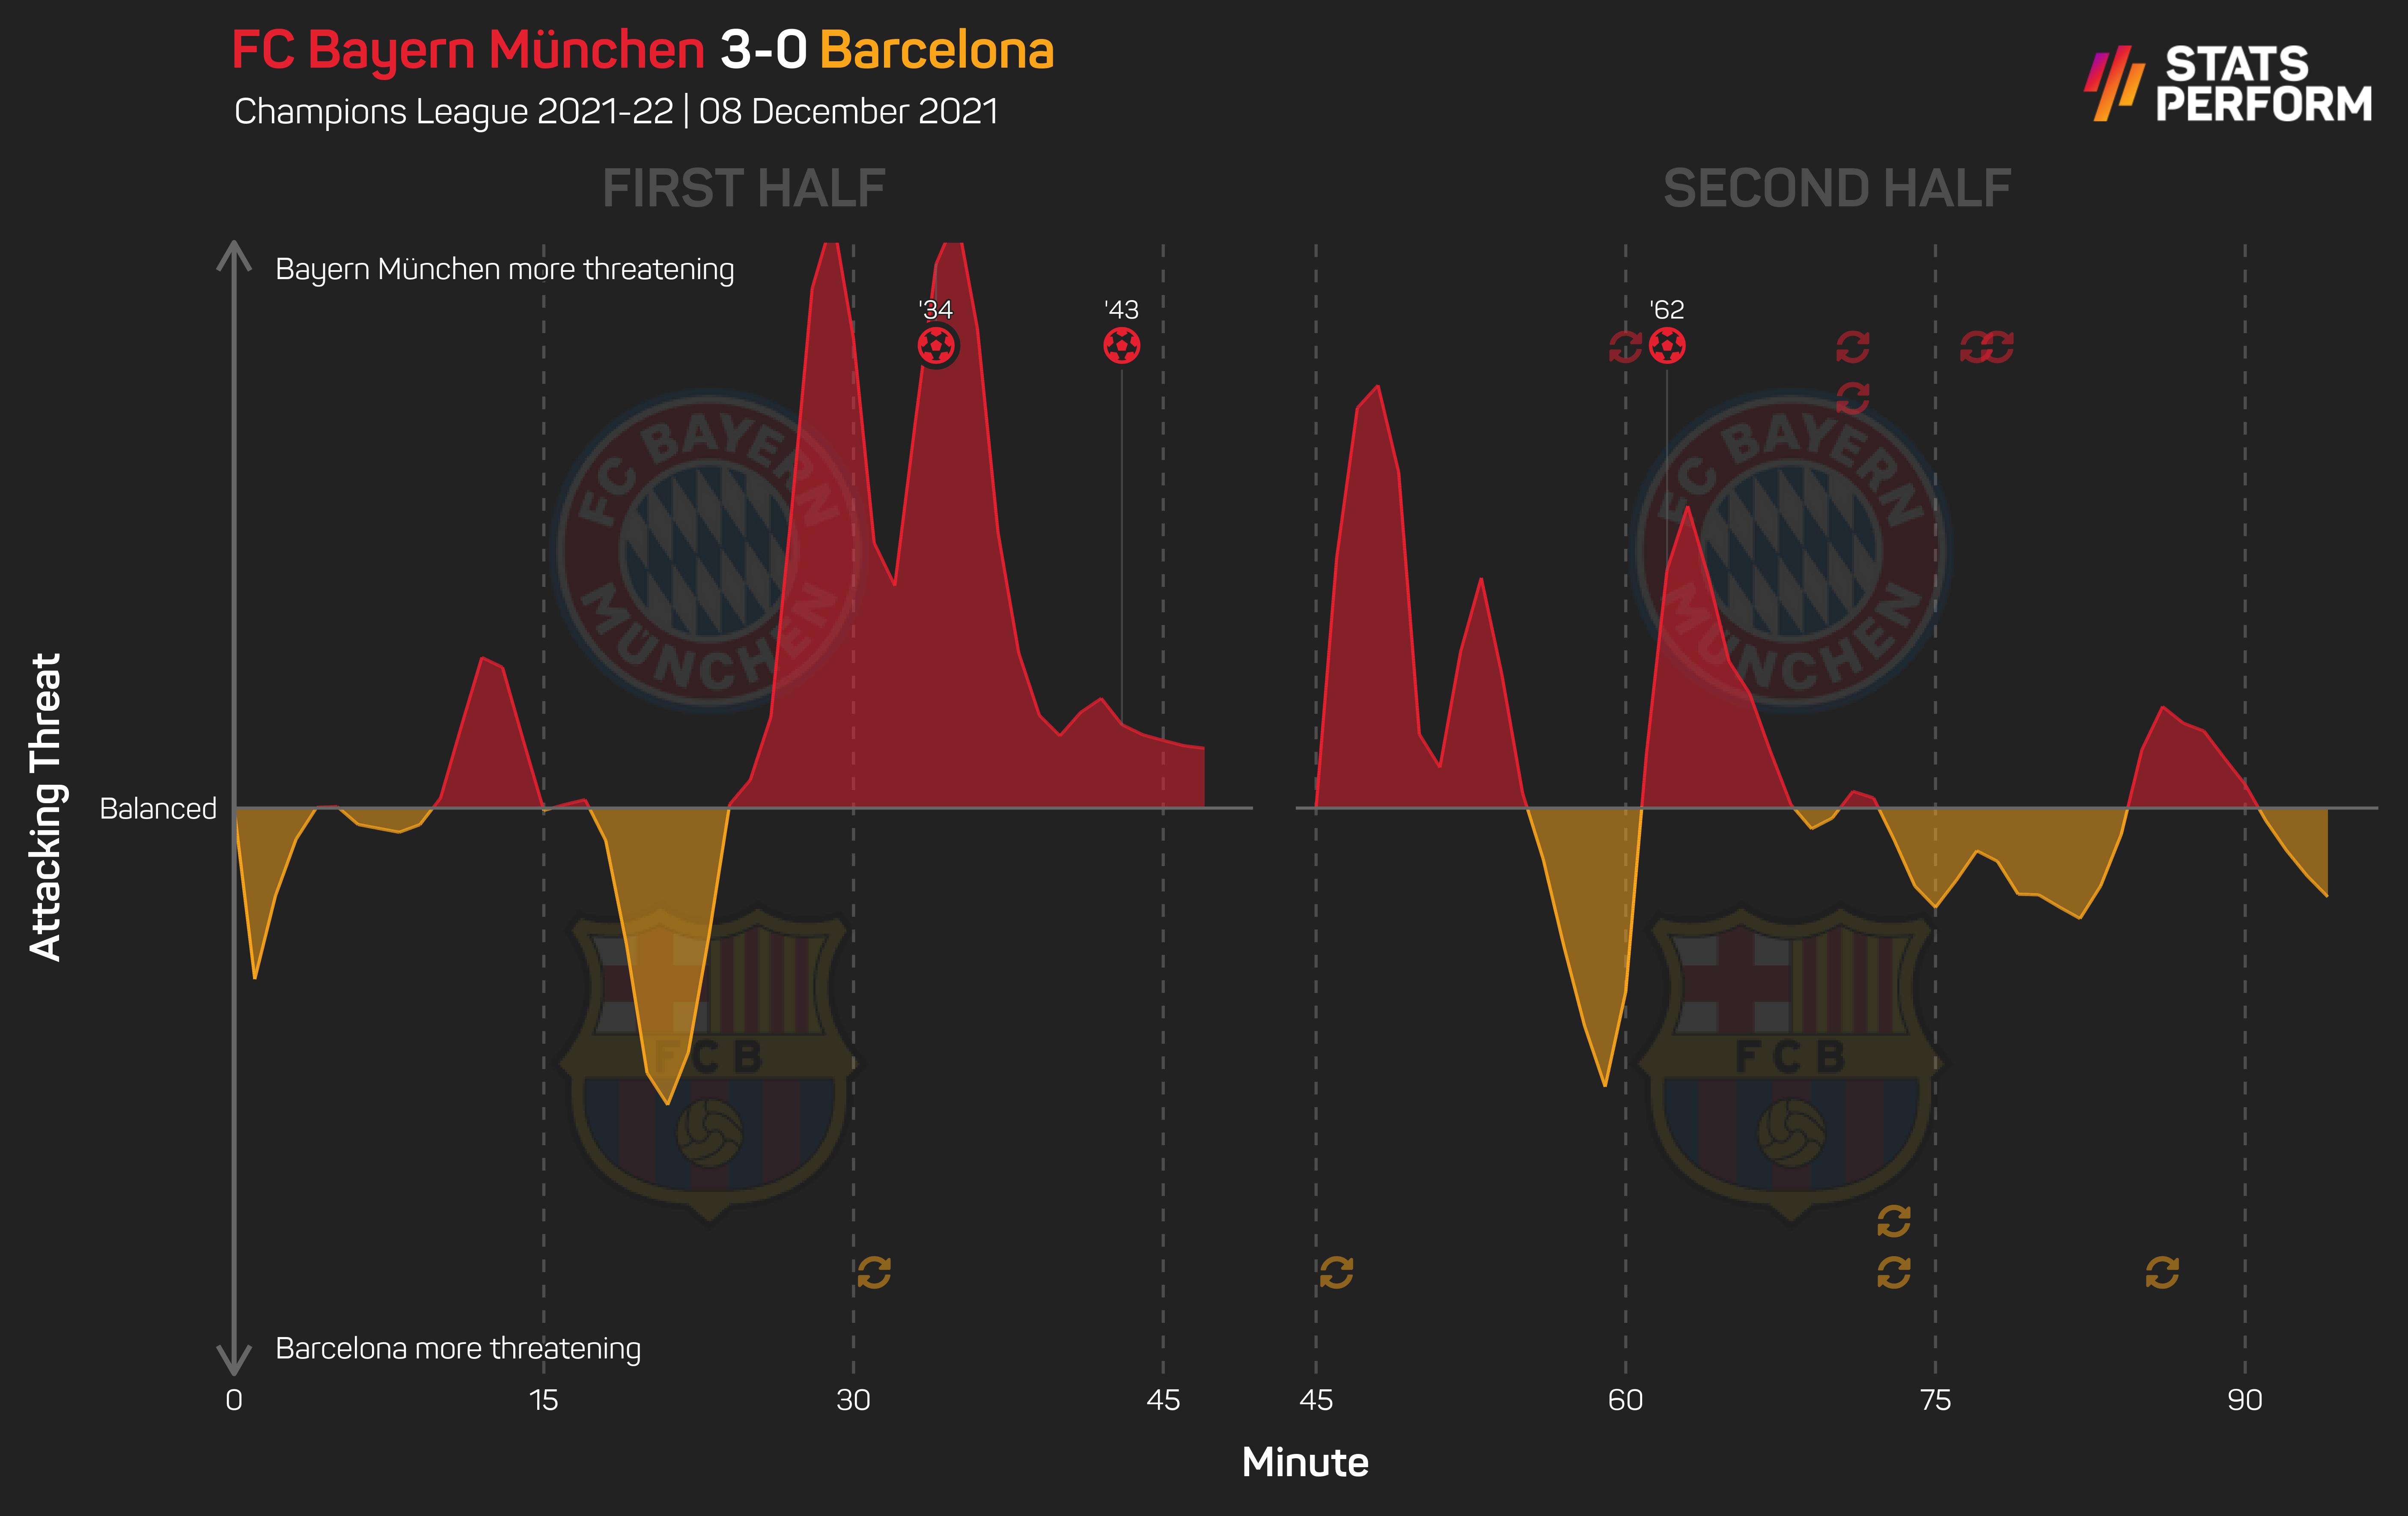 Bayern Munich beat Barcelona 3-0